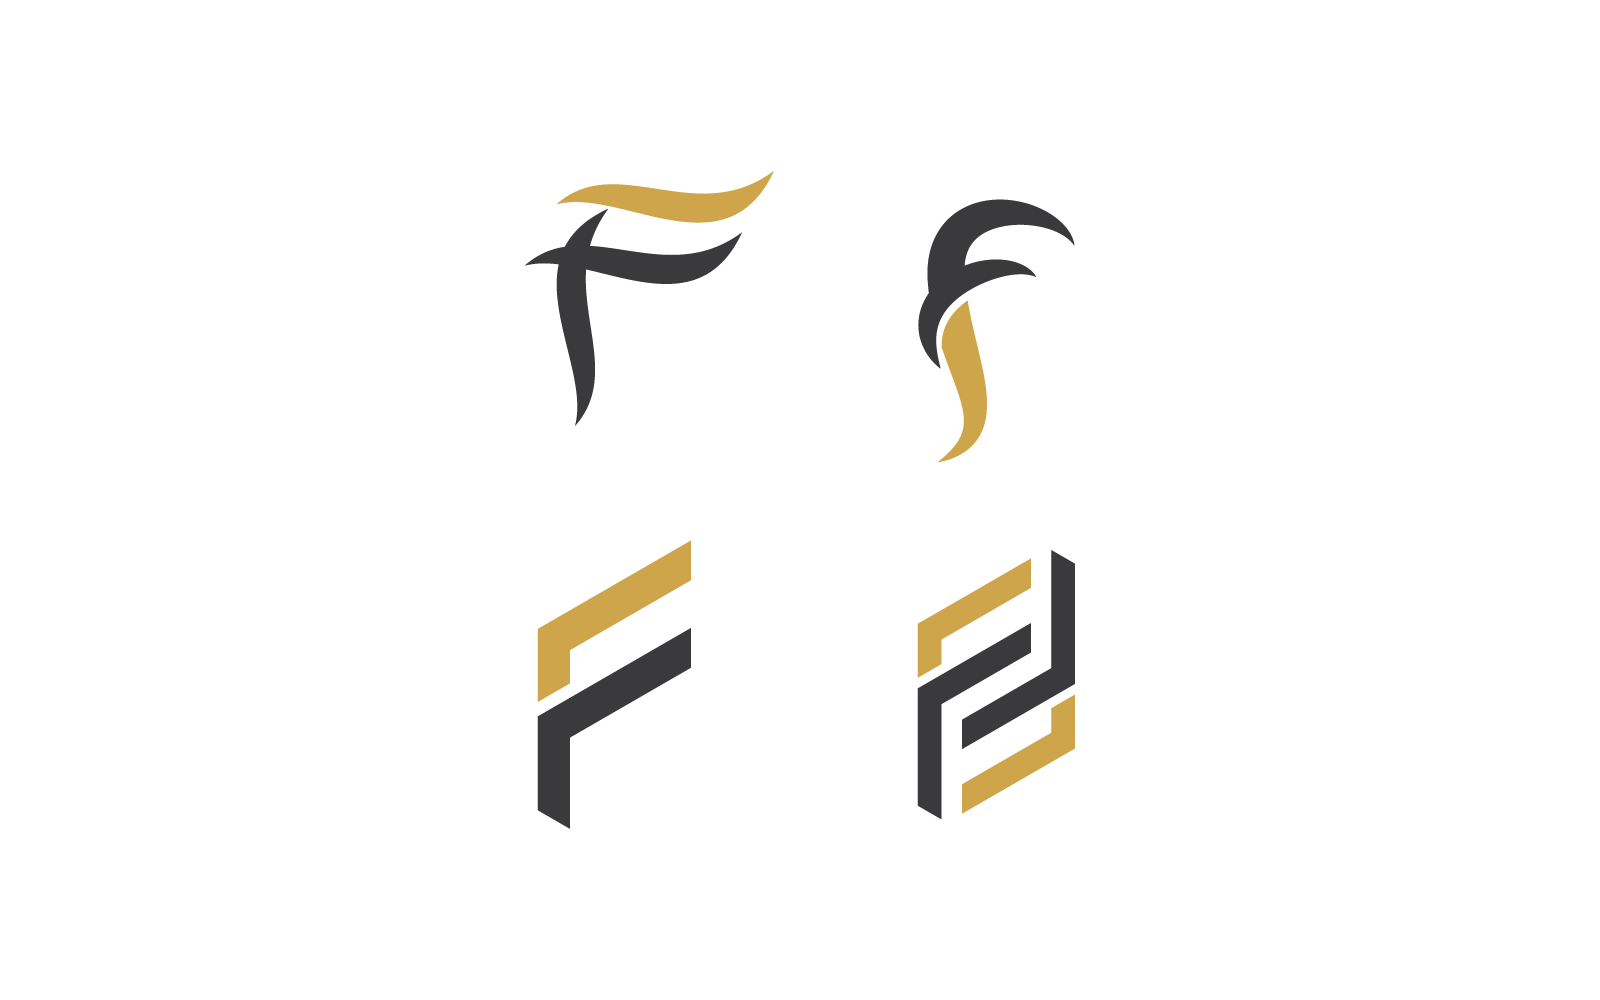 F initial letter logo vector template design